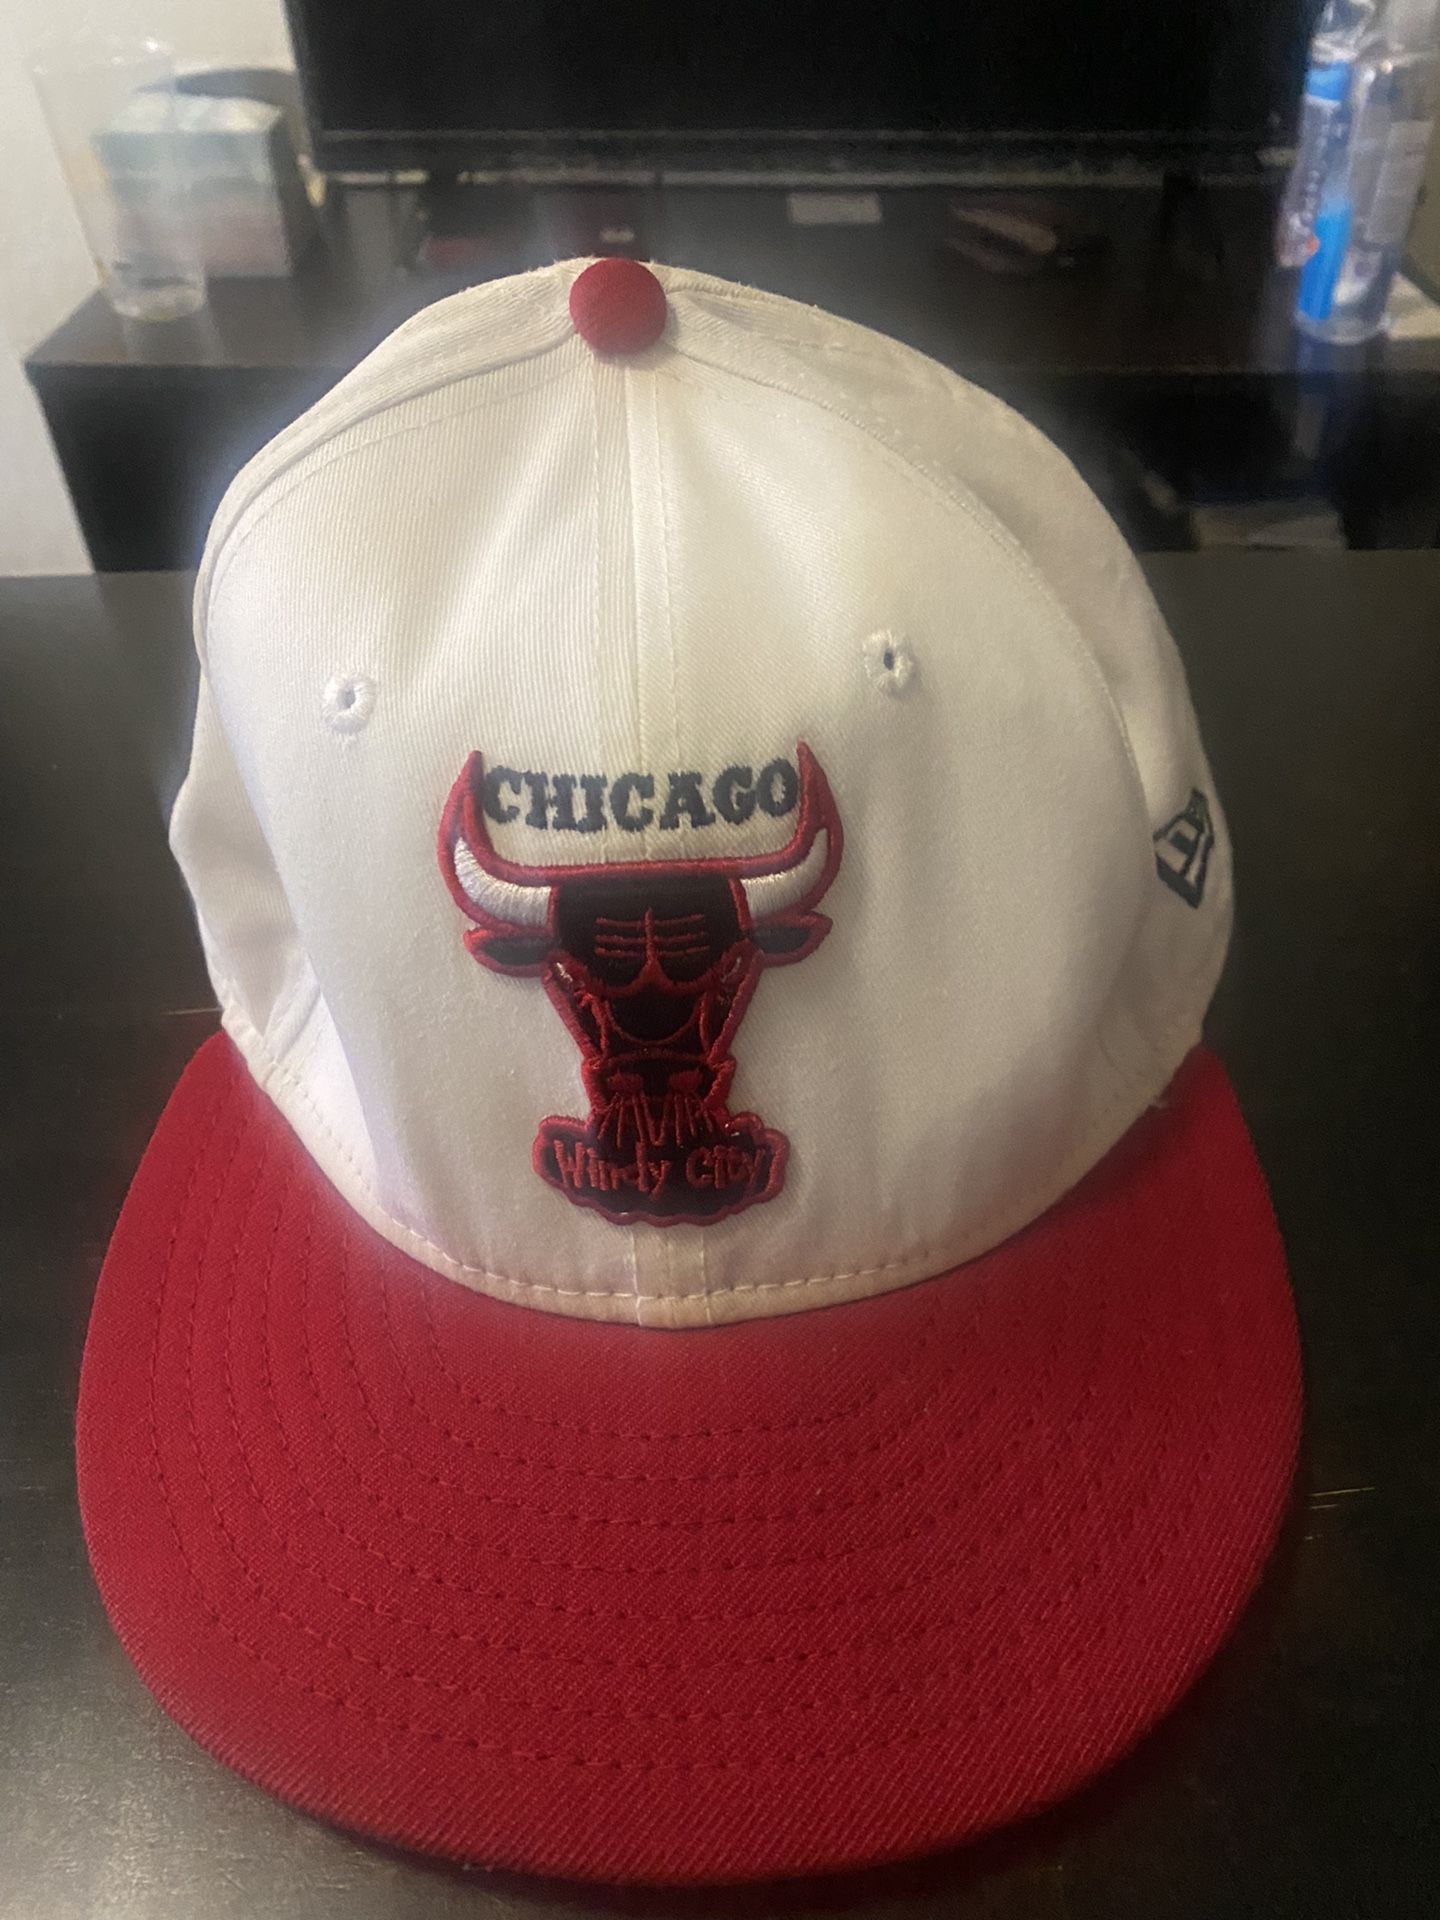 Chicago Bulls New Era SnapBack Hat